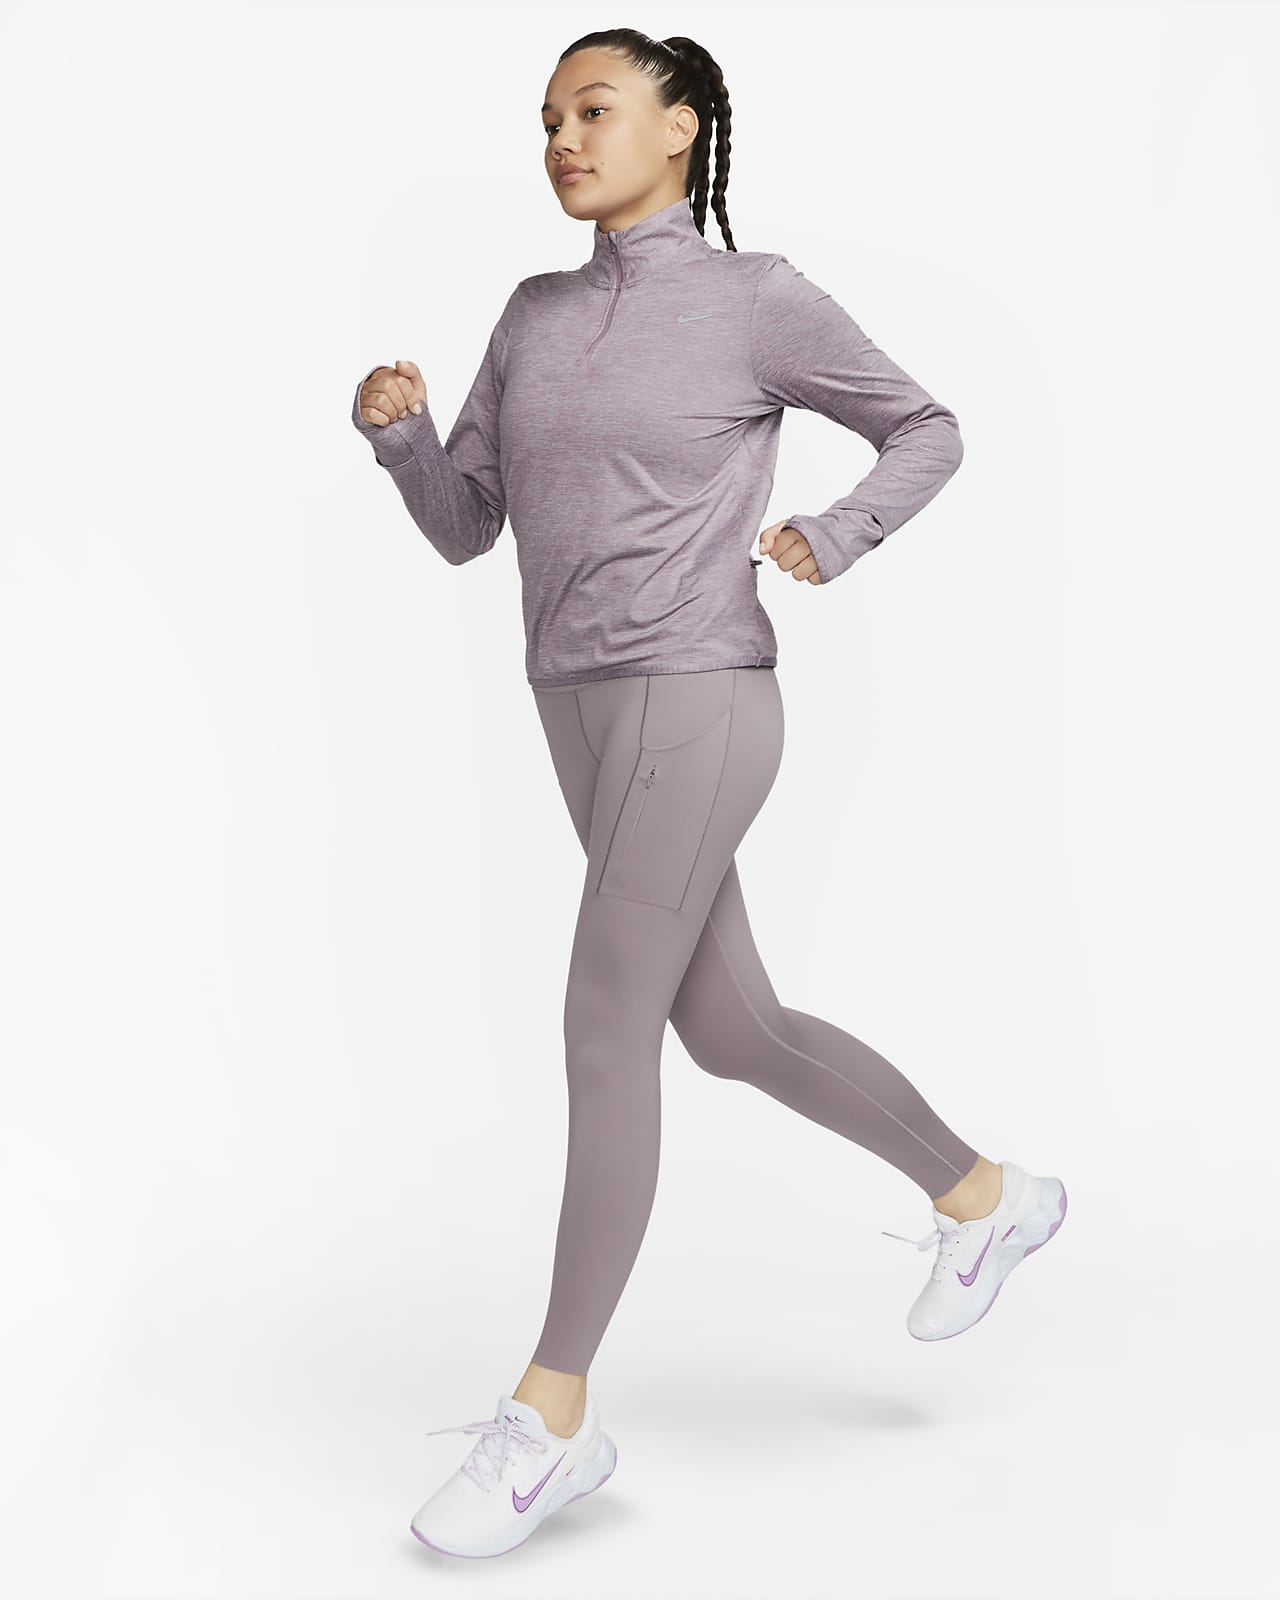 Nike Women's Swift Running Pants - Black, X-Large : : Clothing &  Accessories